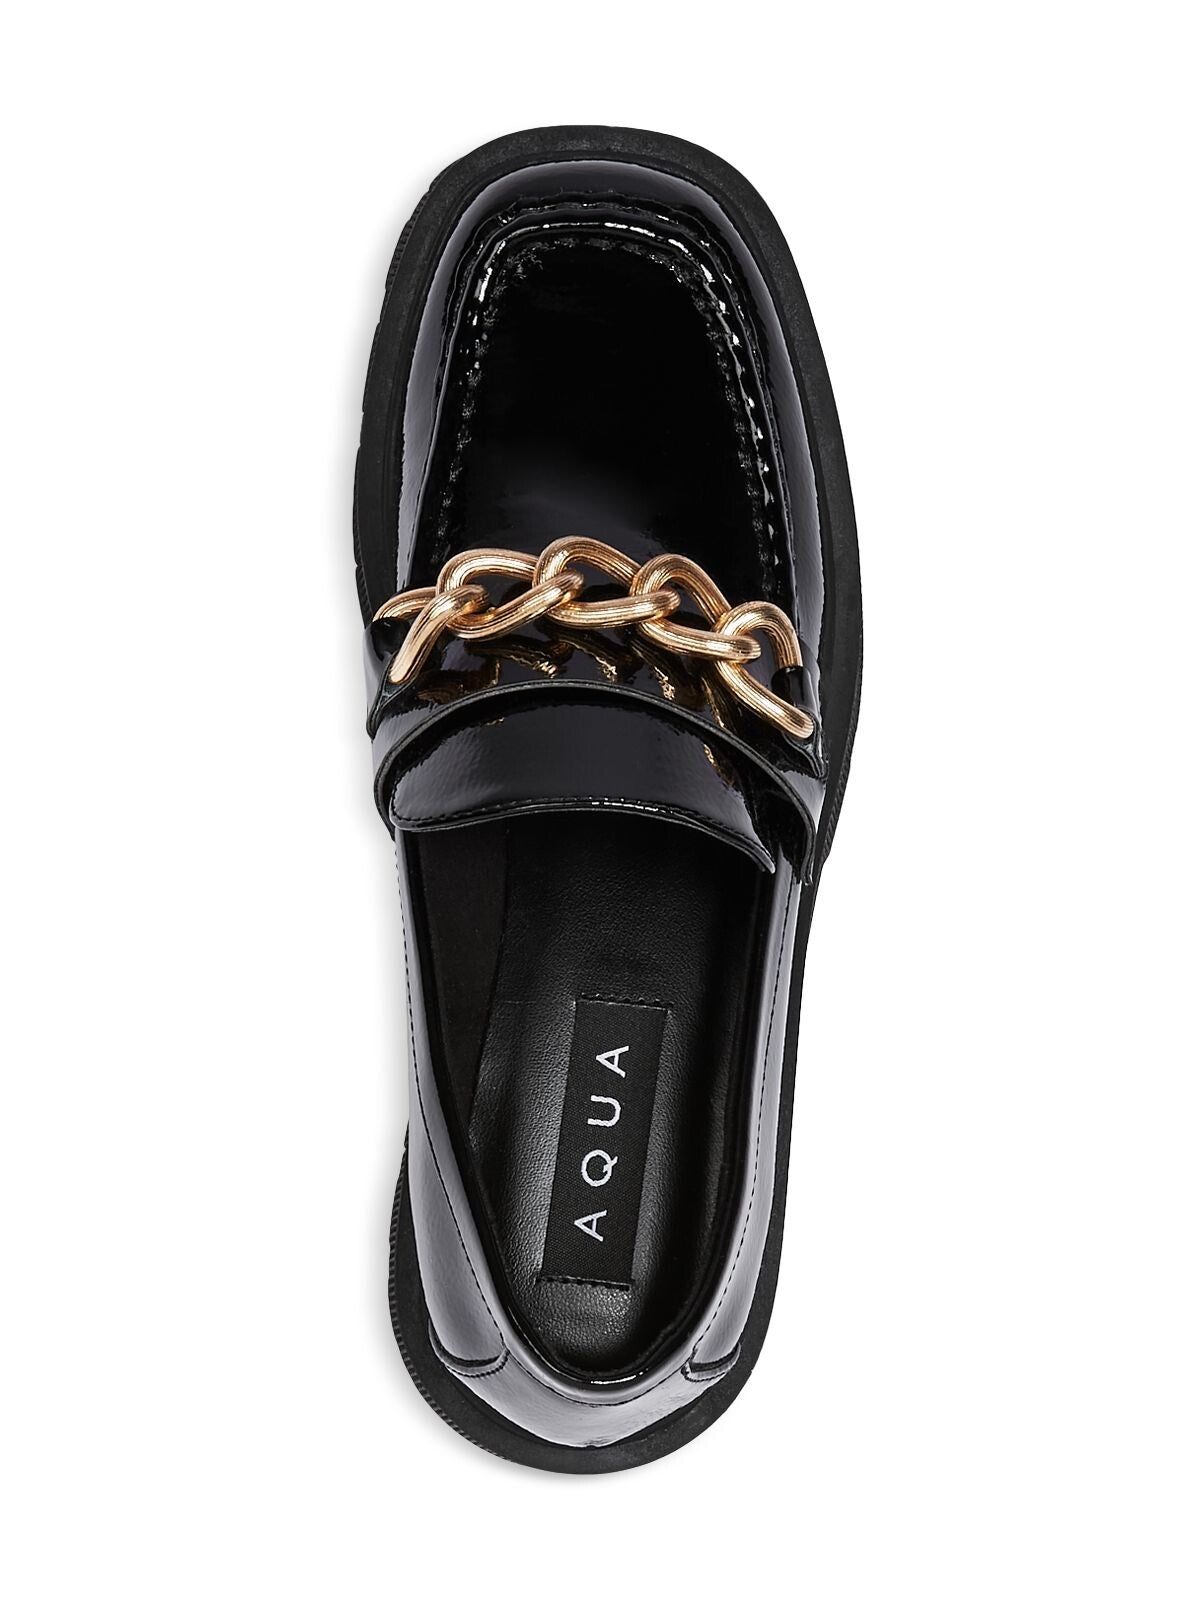 AQUA Womens Black Chain 1" Platform Comfort Brynn Square Toe Block Heel Slip On Leather Loafers Shoes 10 M